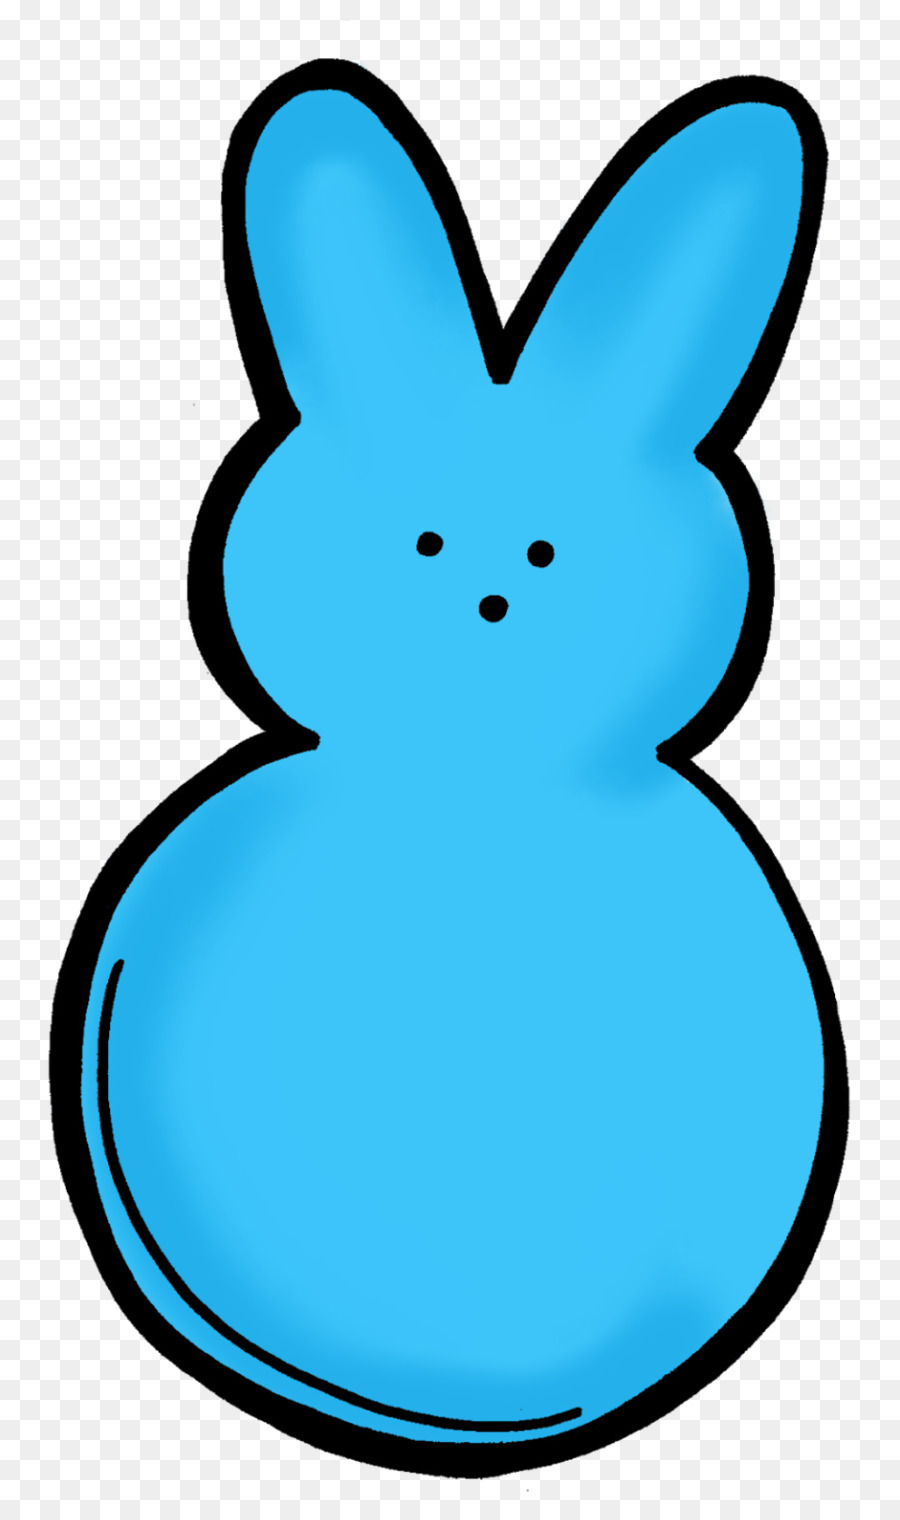 Easter Bunny Rabbit Peeps Clip art - Peeps Logo Cliparts png download - 957*1600 - Free Transparent Easter Bunny png Download.